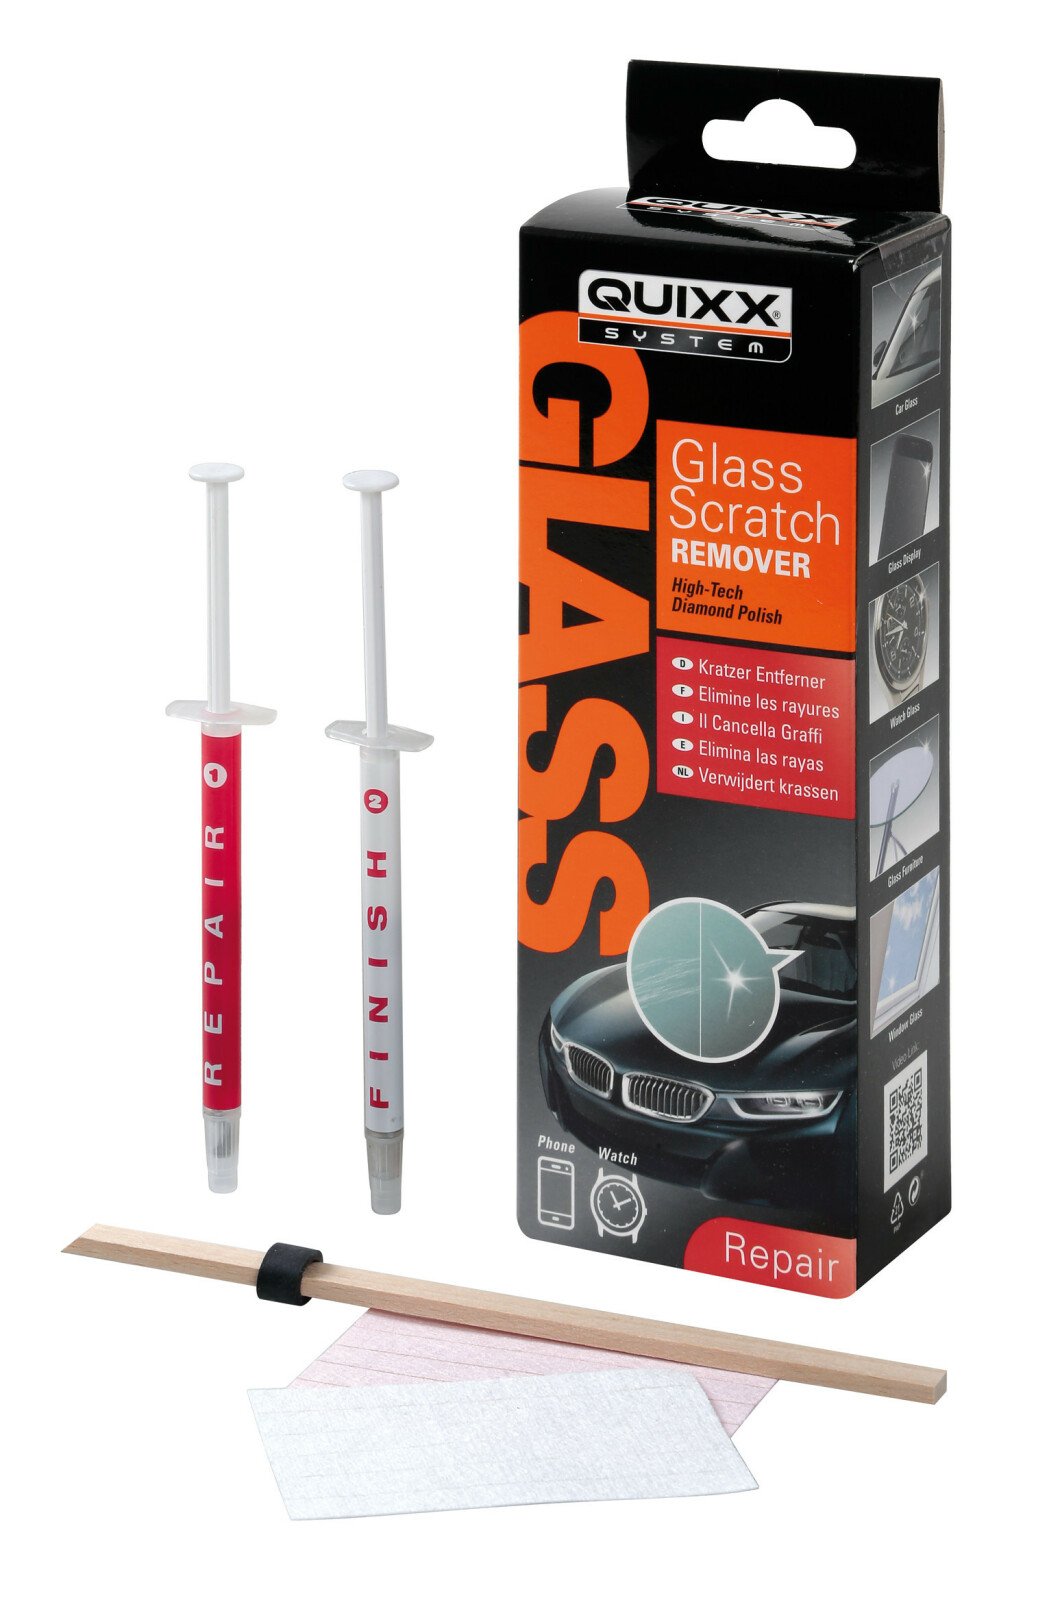 Quixx, glass scratch remover kit thumb